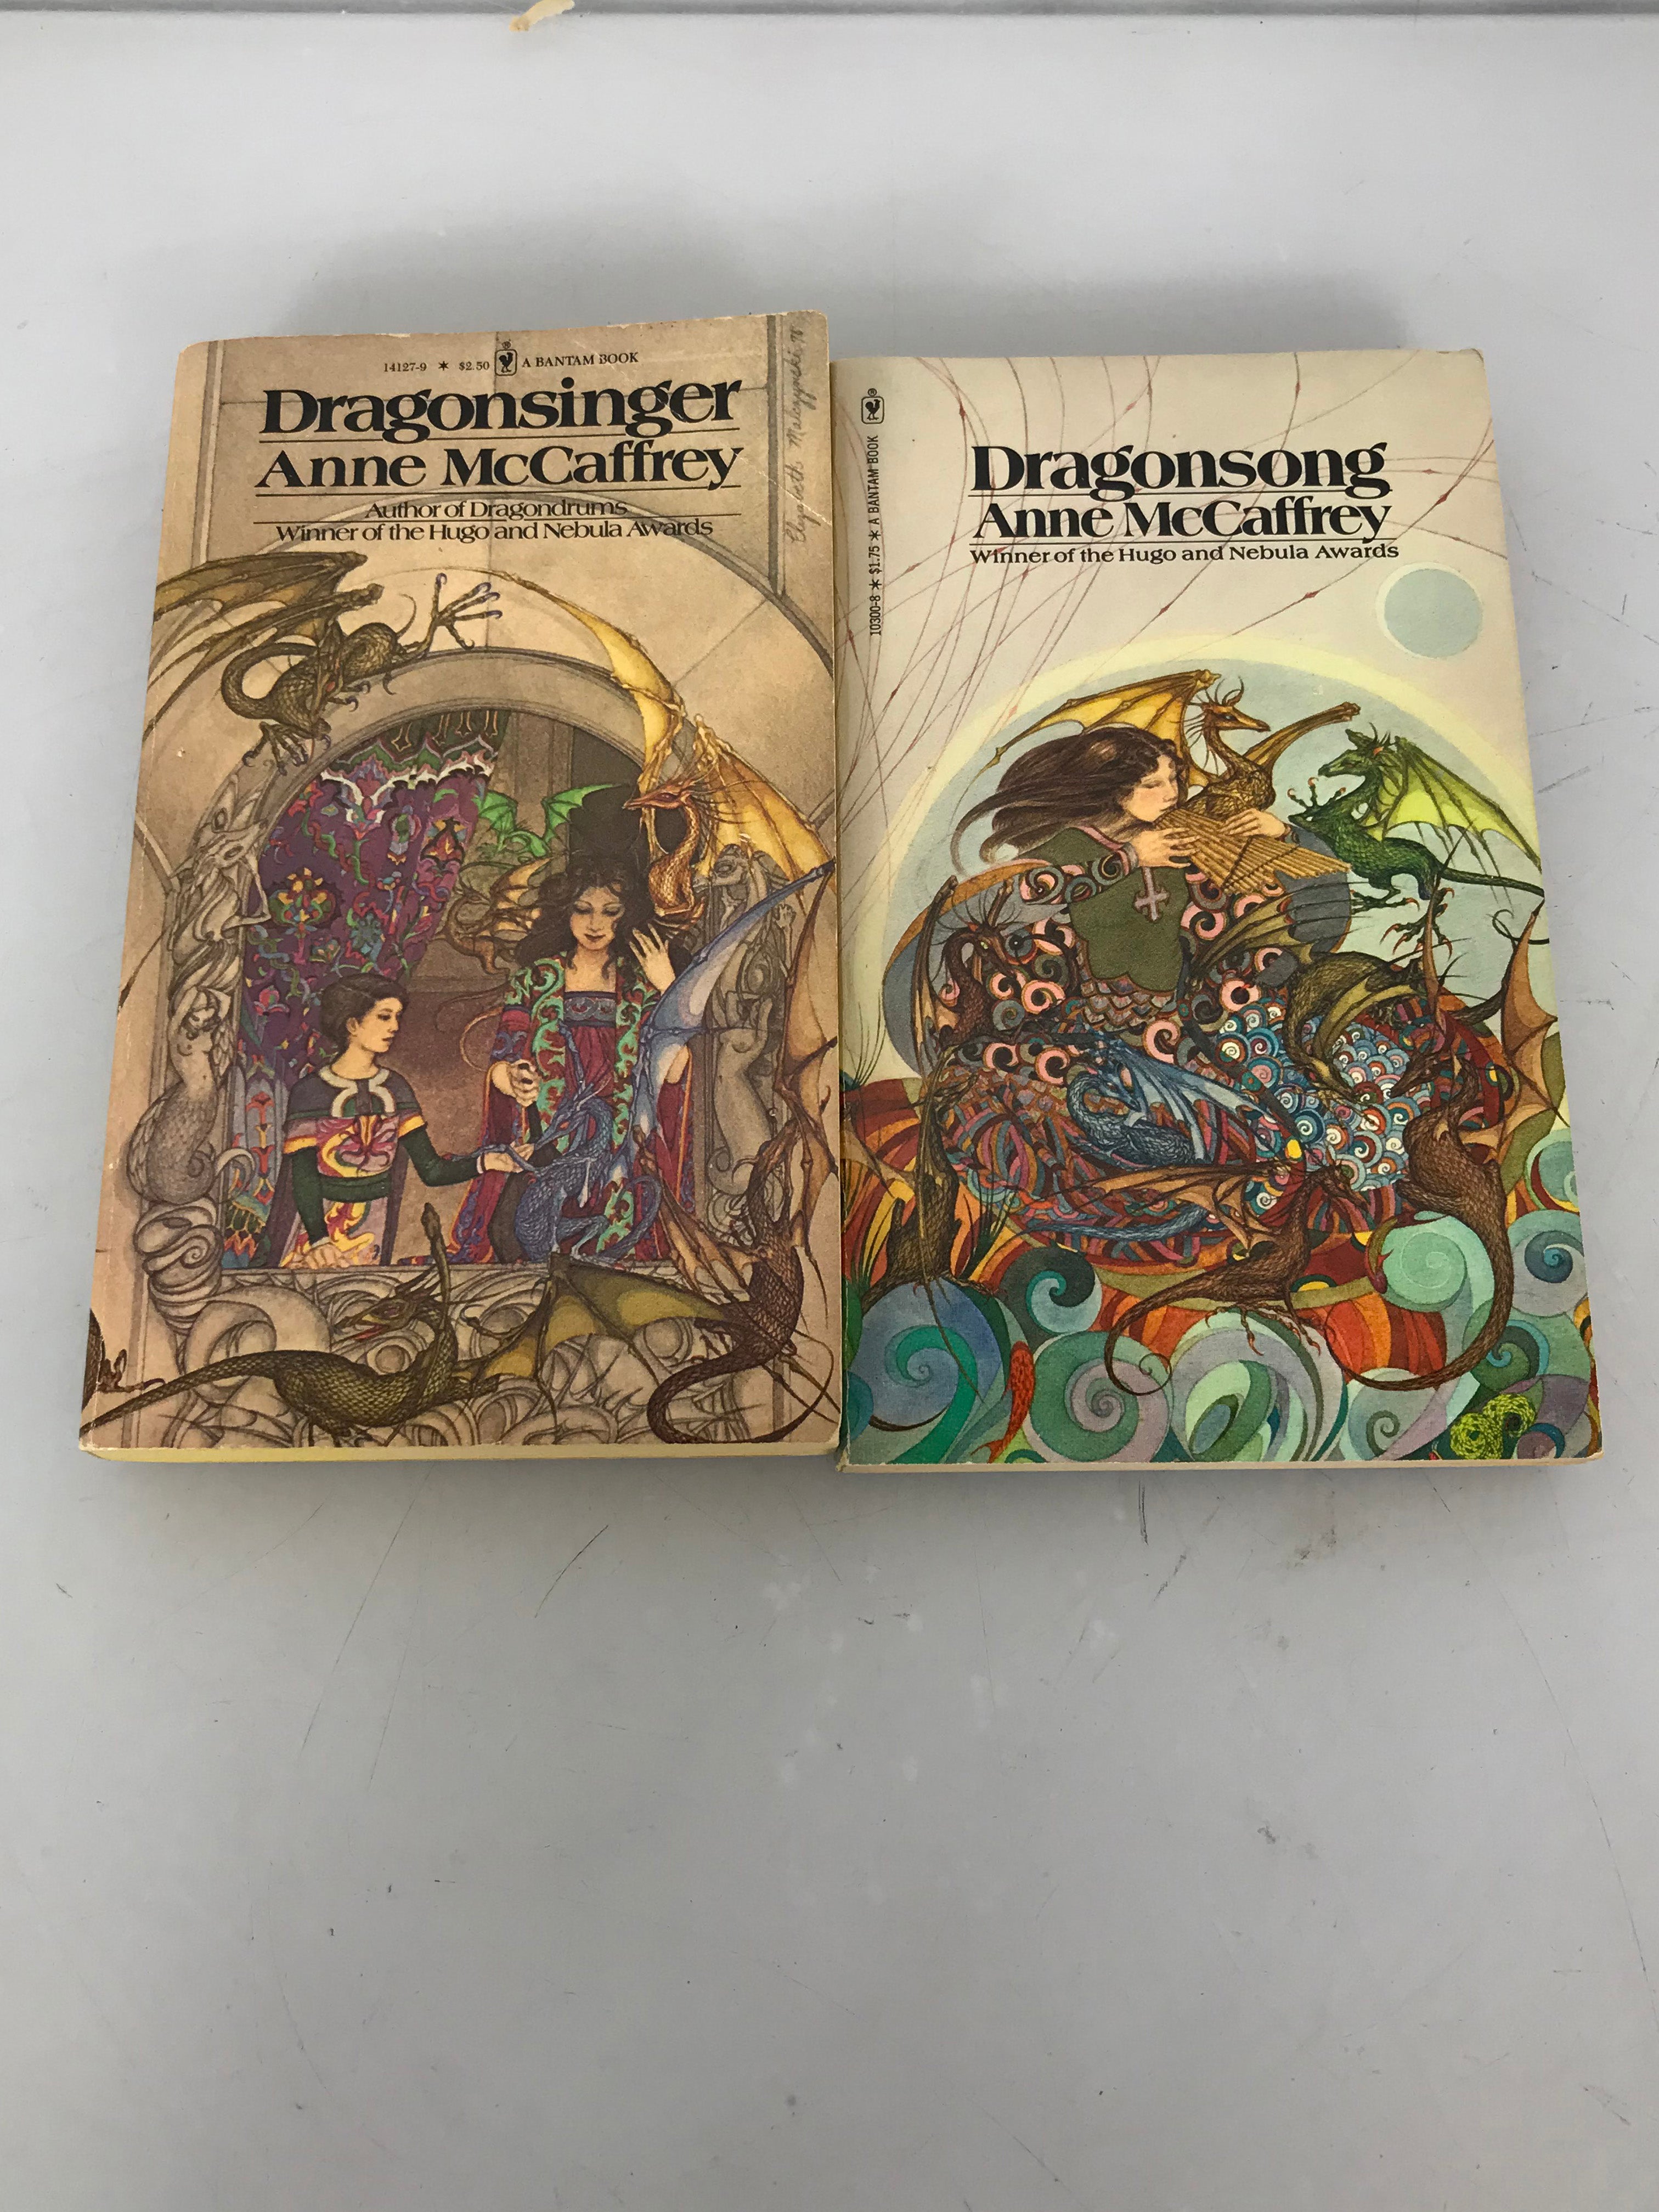 Dragonsong & Dragonsinger by Anne McCaffrey 1976/78 PB